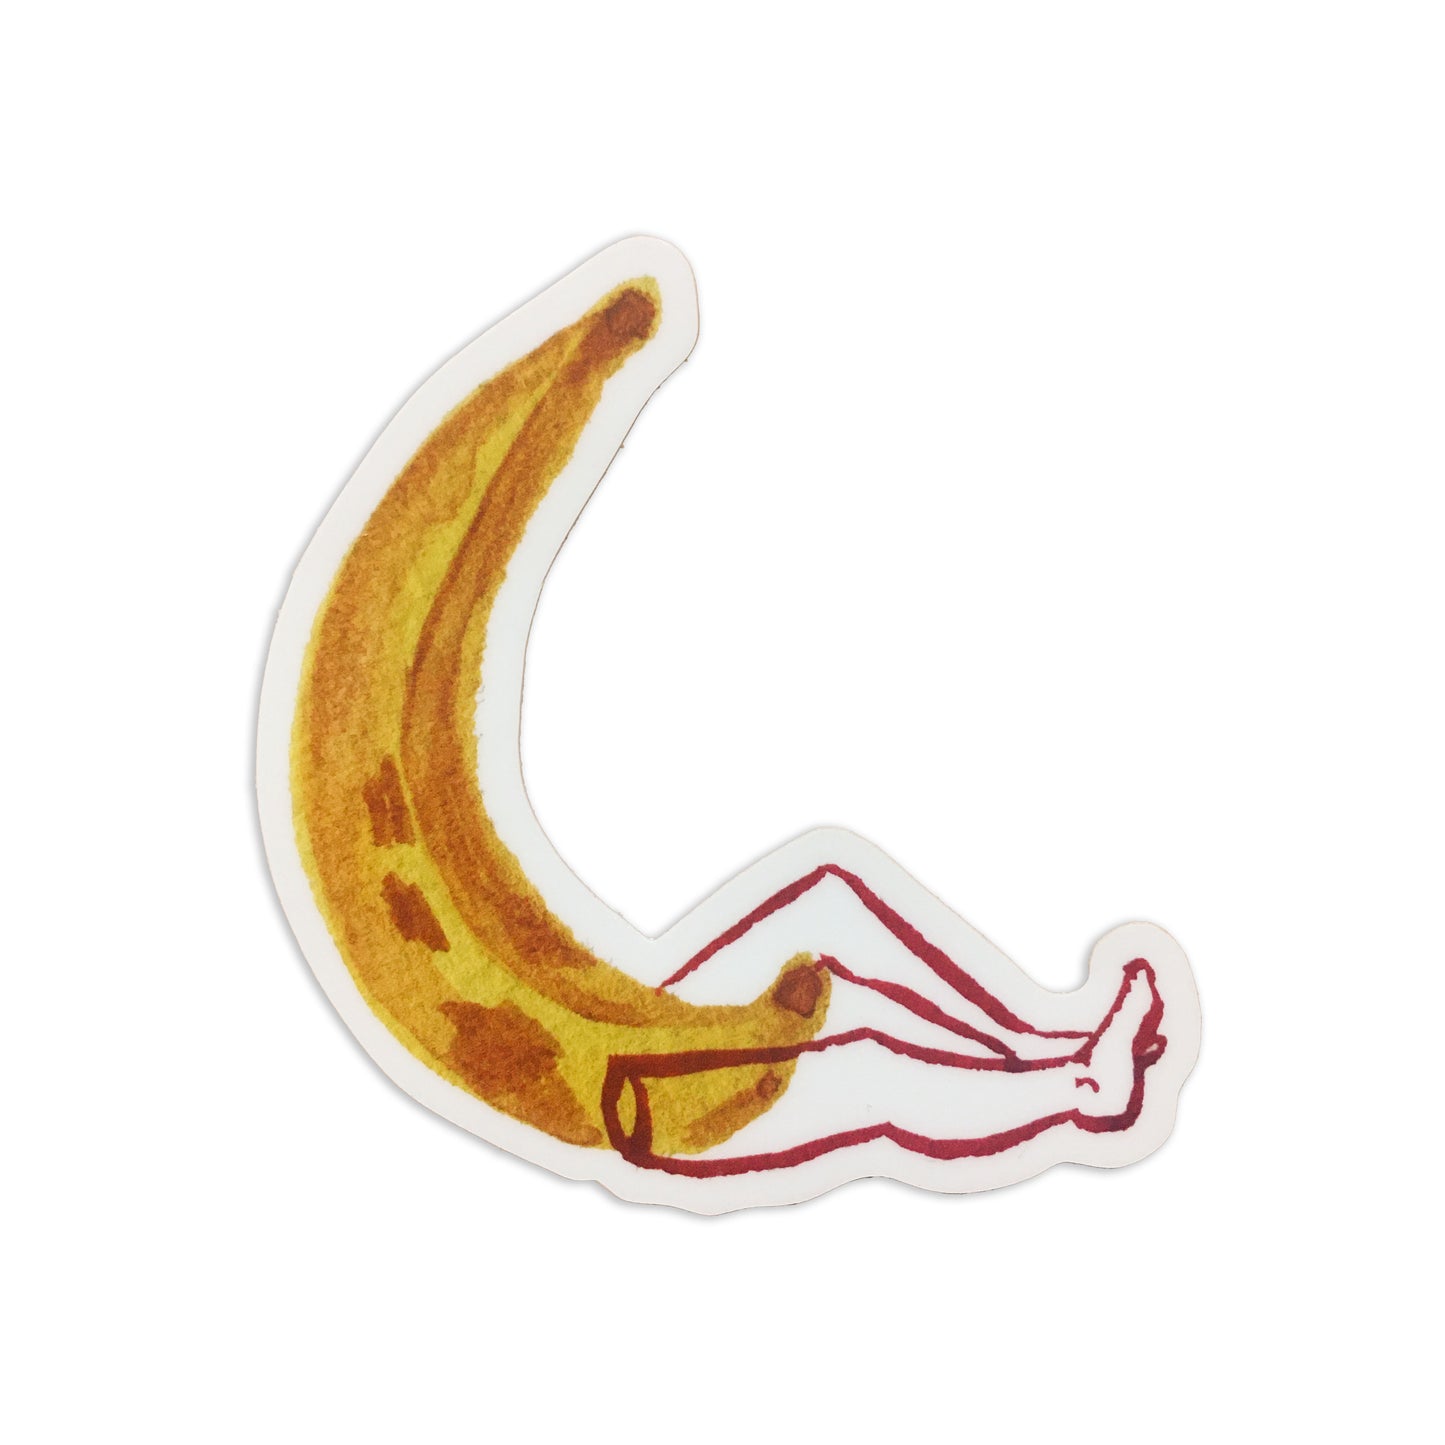 Banana with legs sticker